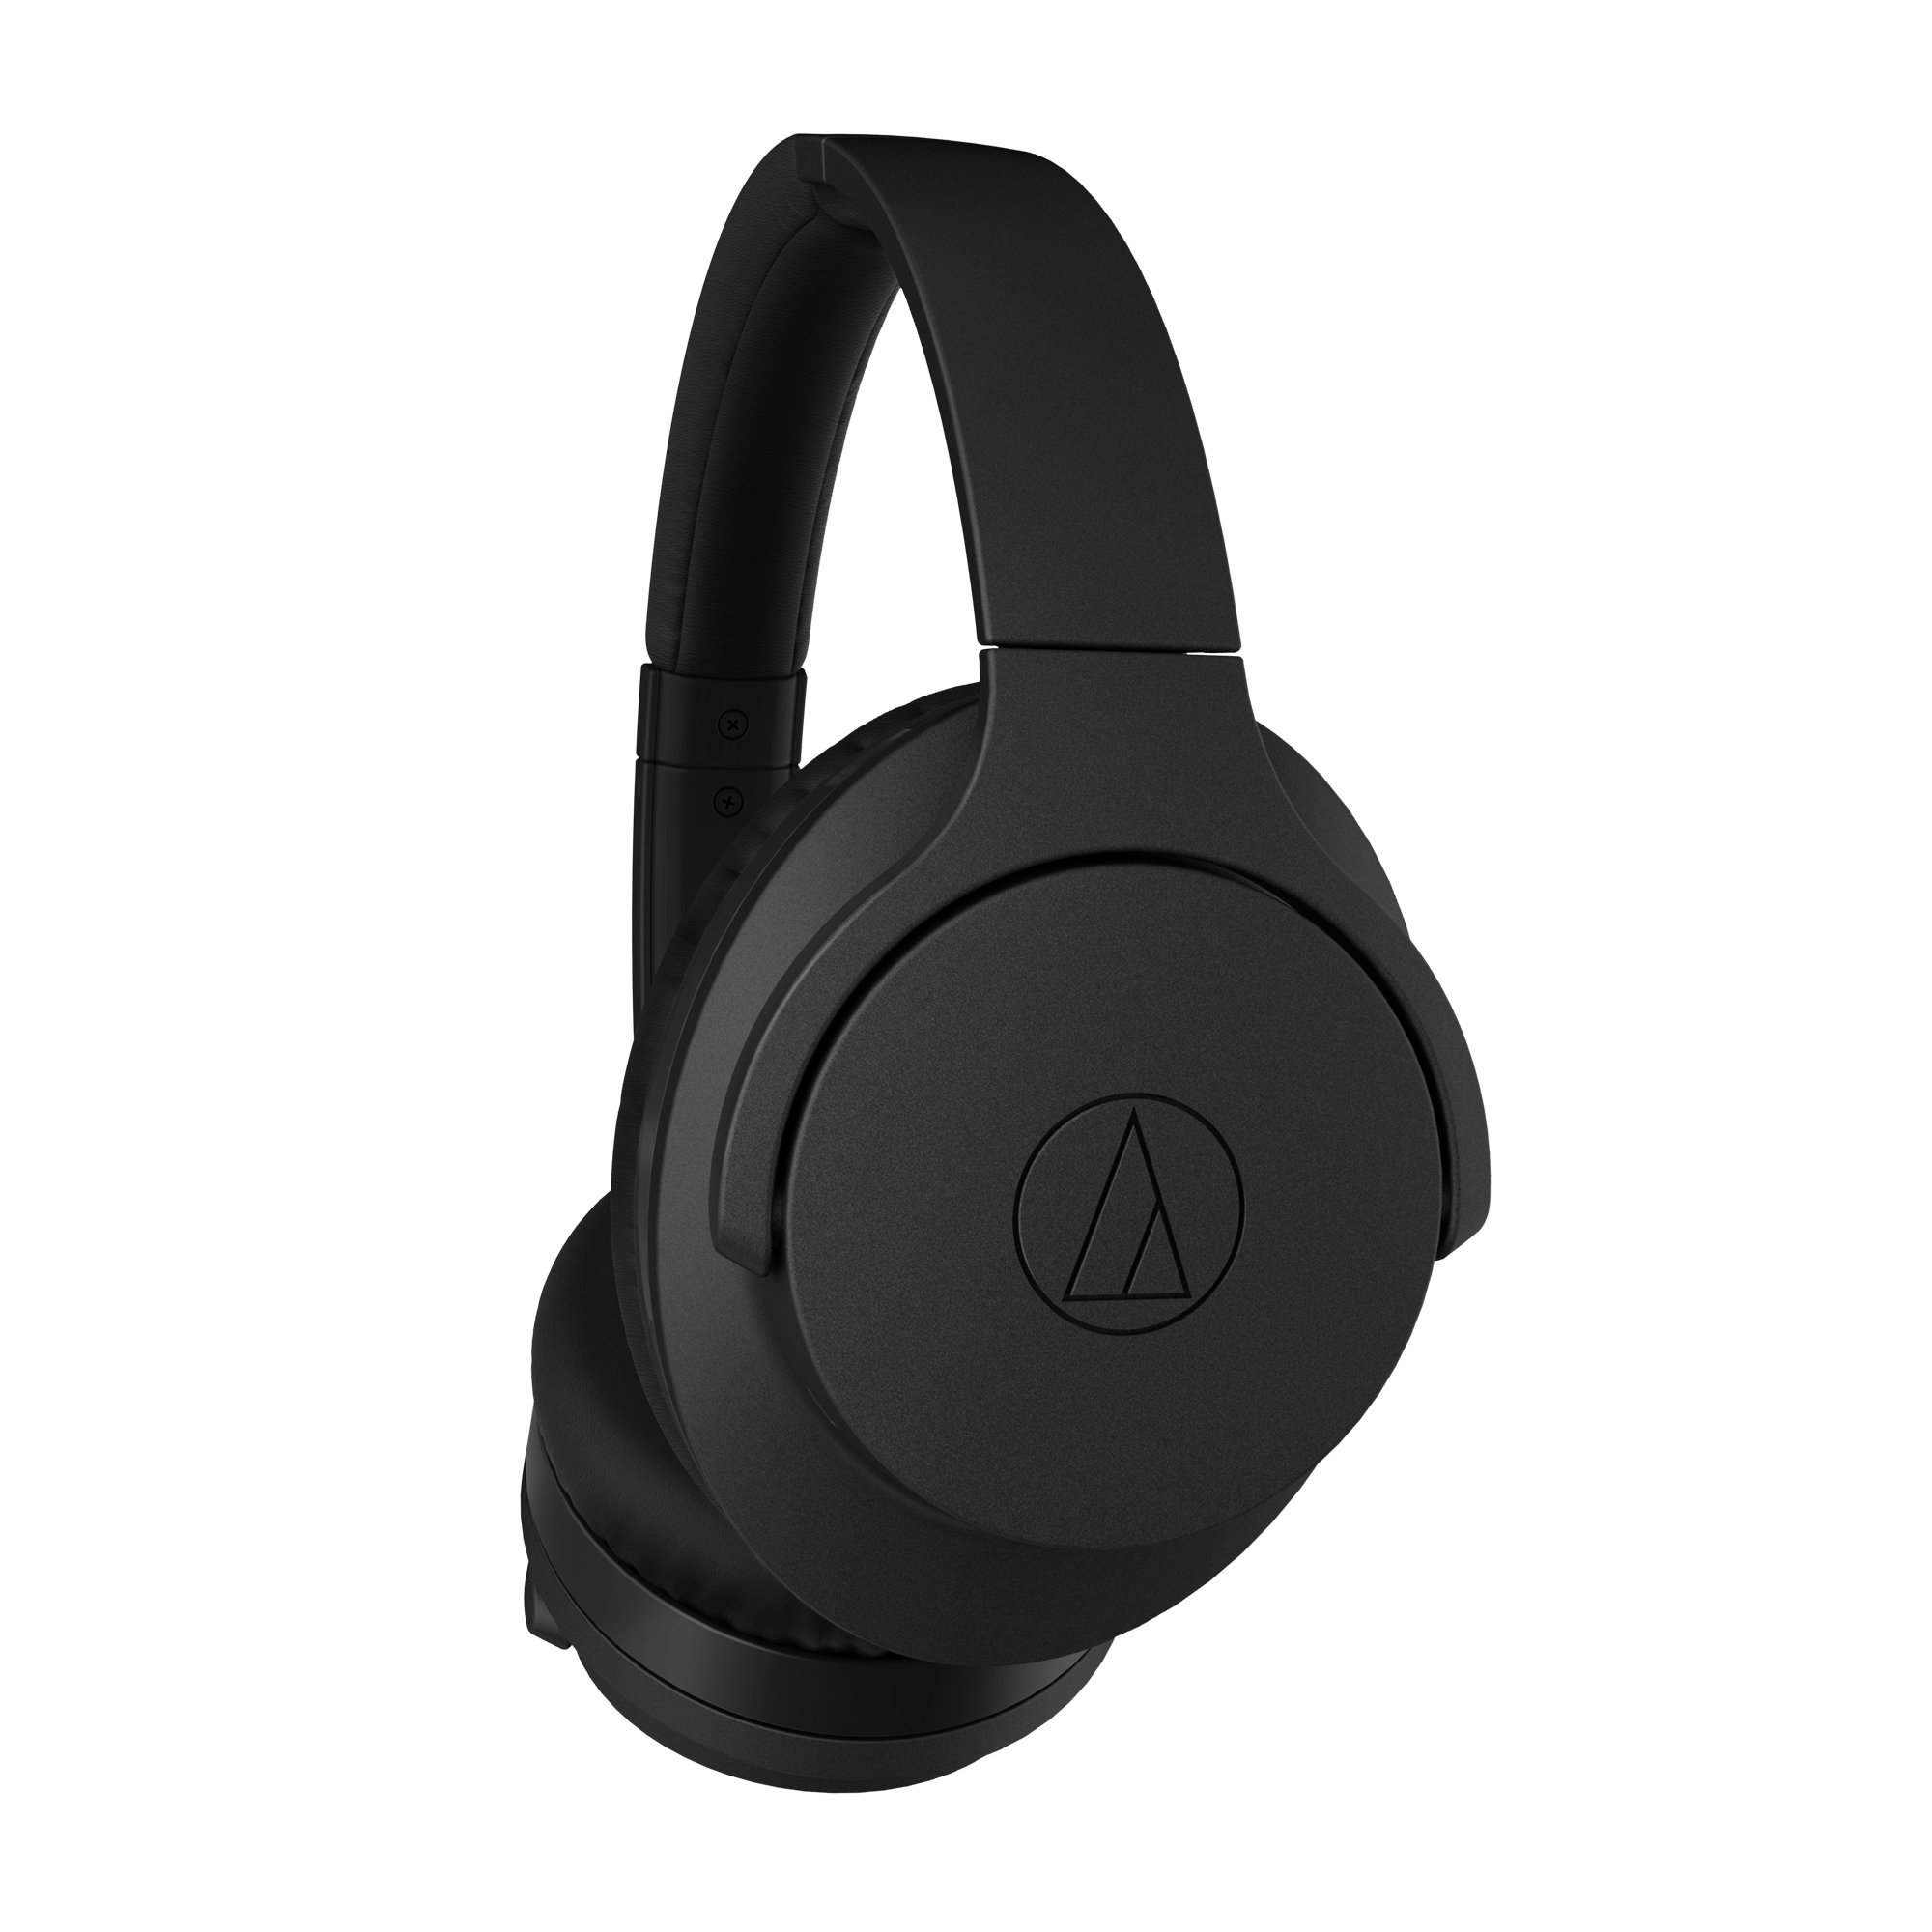 ATH-ANC700BTWireless noise-cancelling headphones | Audio-Technica